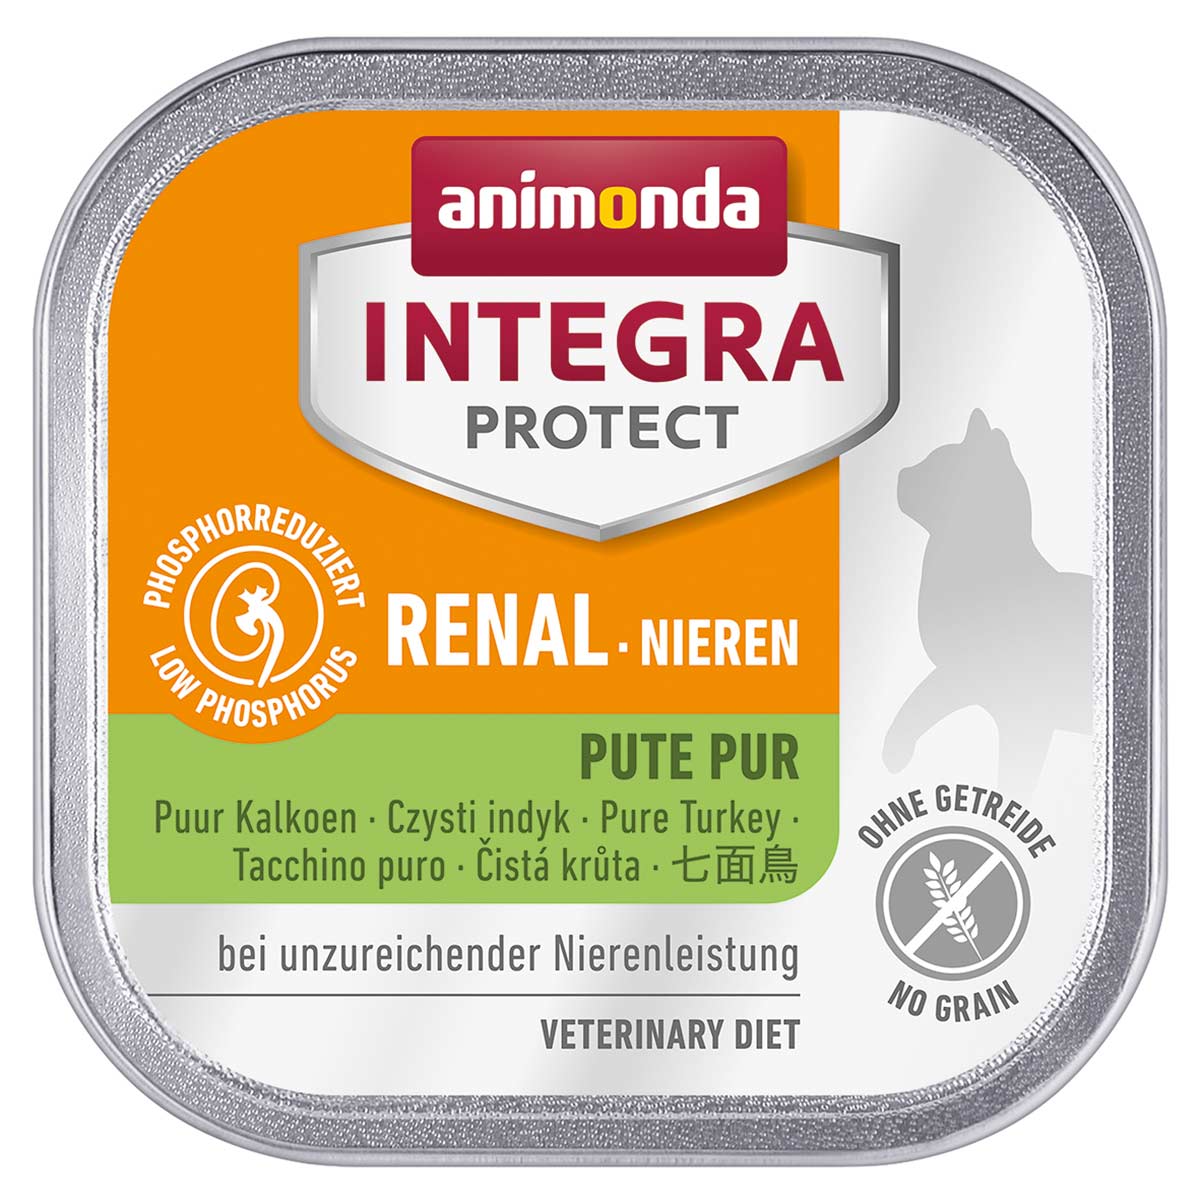 animonda INTEGRA PROTECT Renal Pute pur 6x100g von animonda Integra Protect